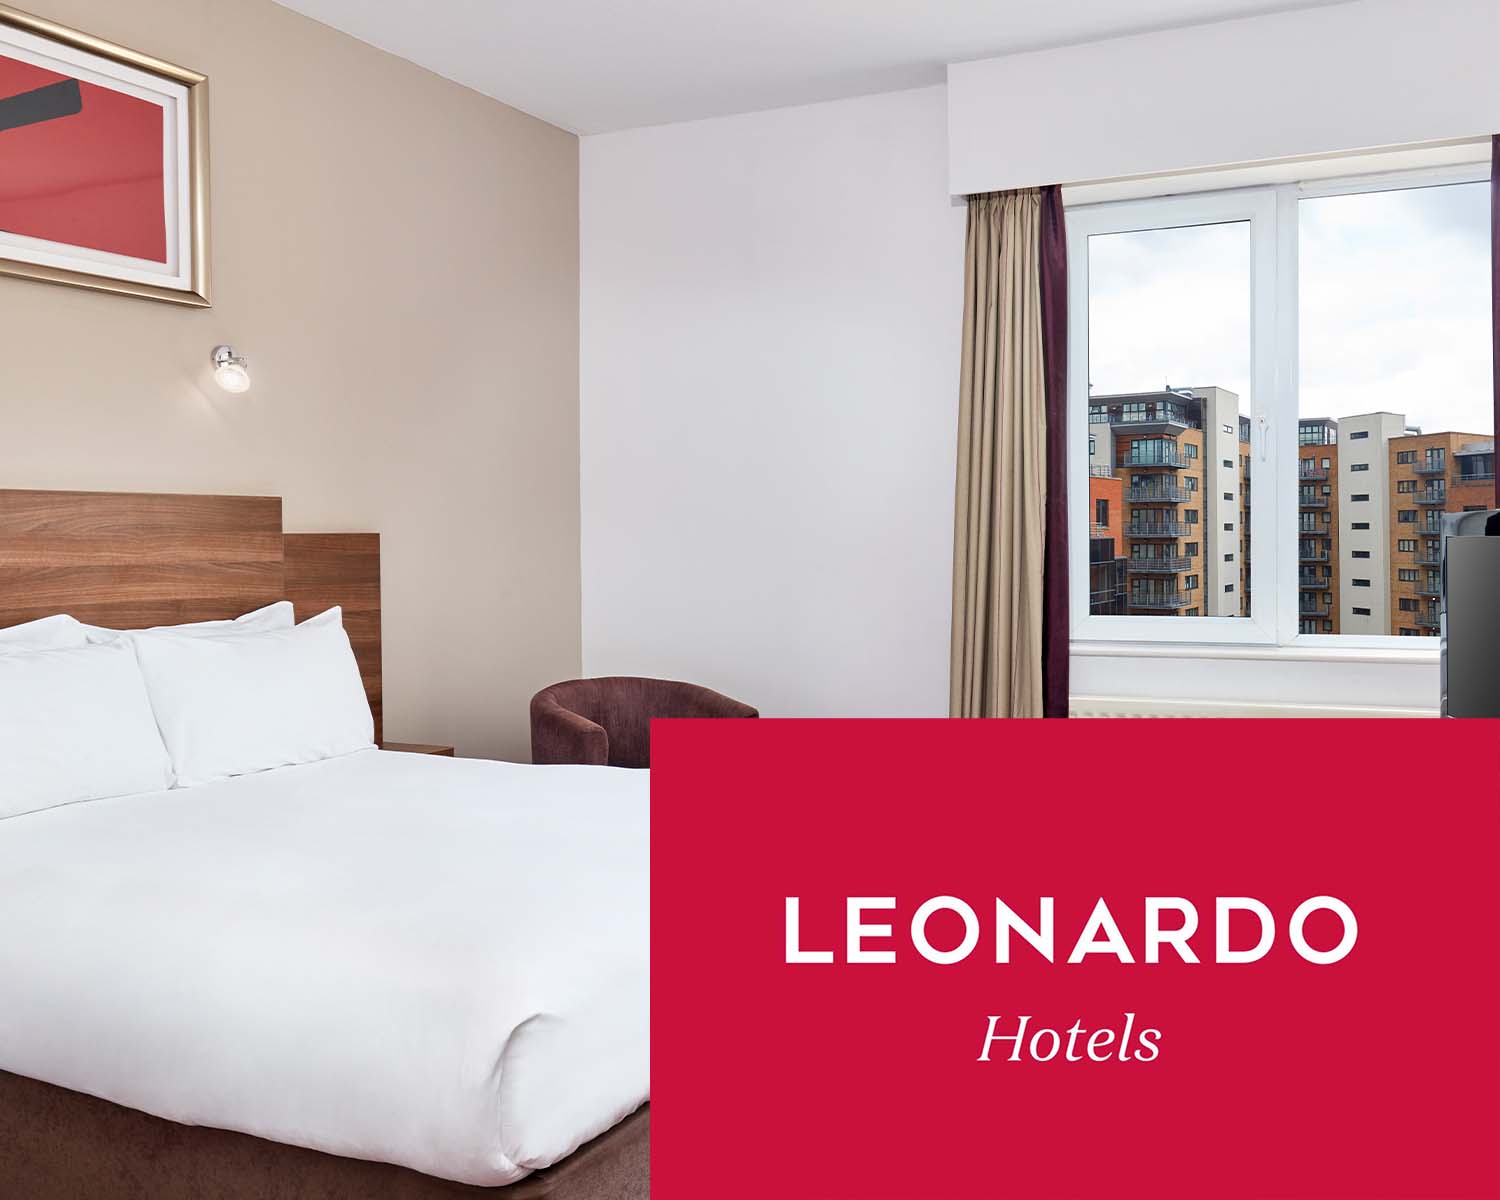 Leonardo Hotel Newcastle